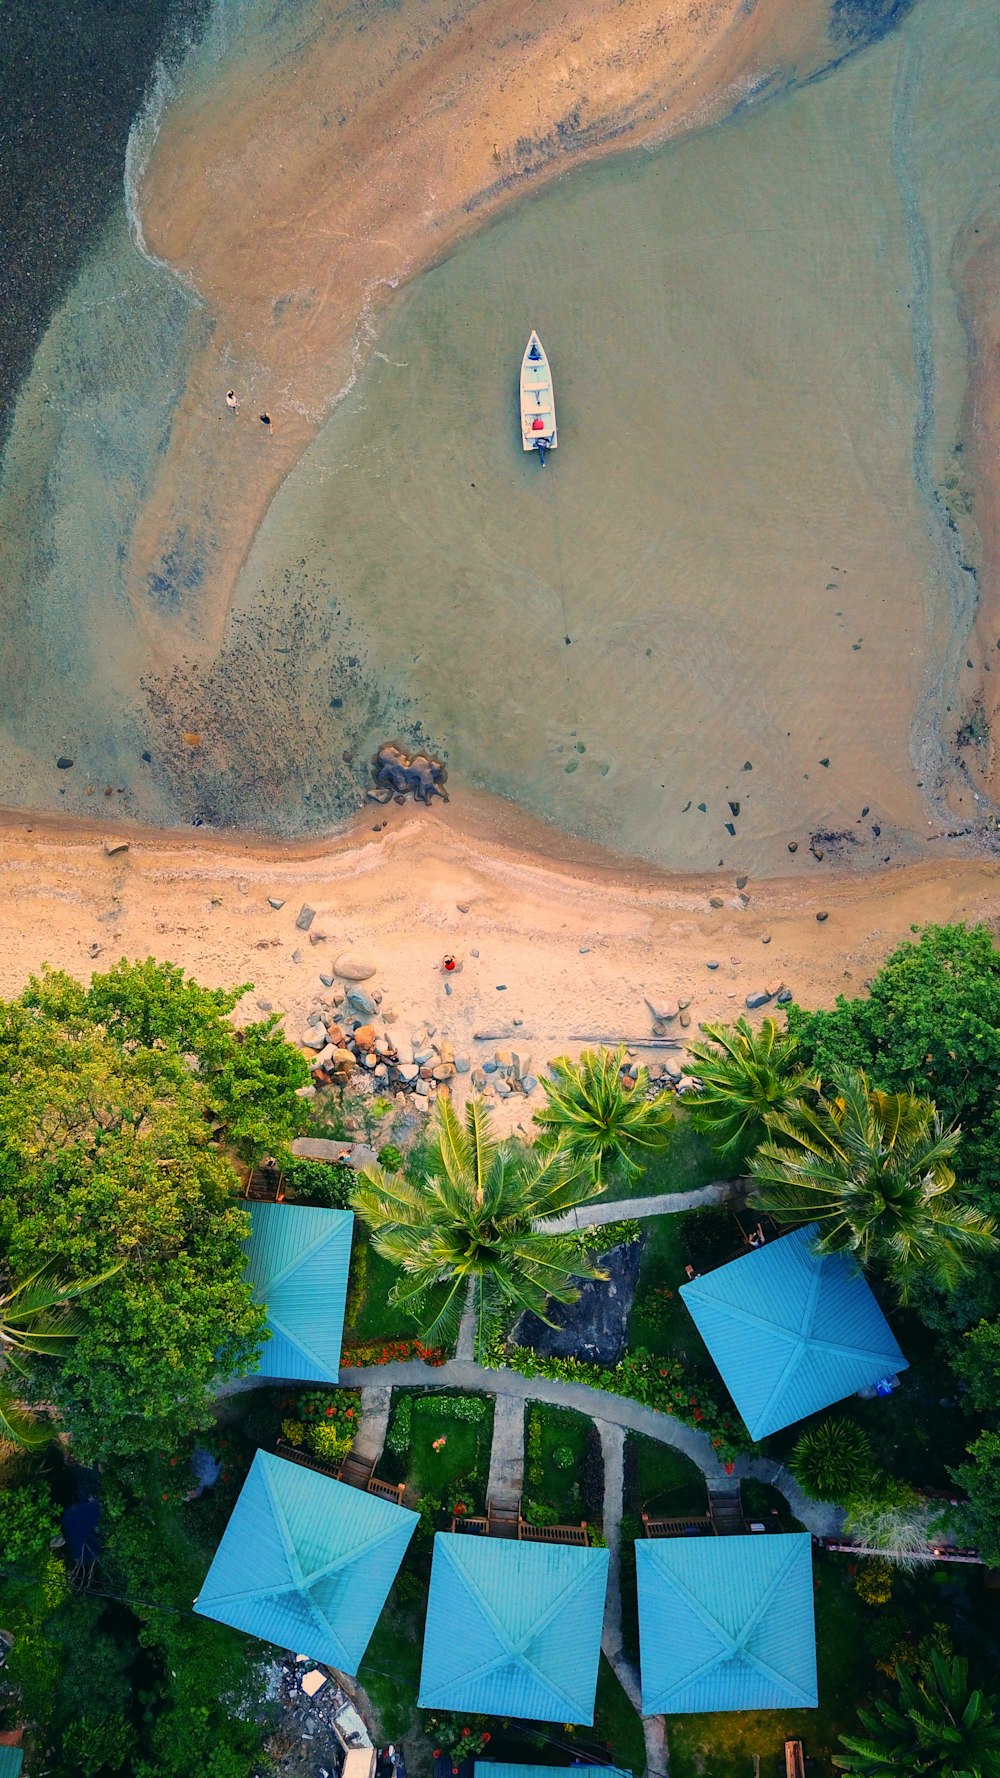 an aerial view of a beach with blue umbrellas